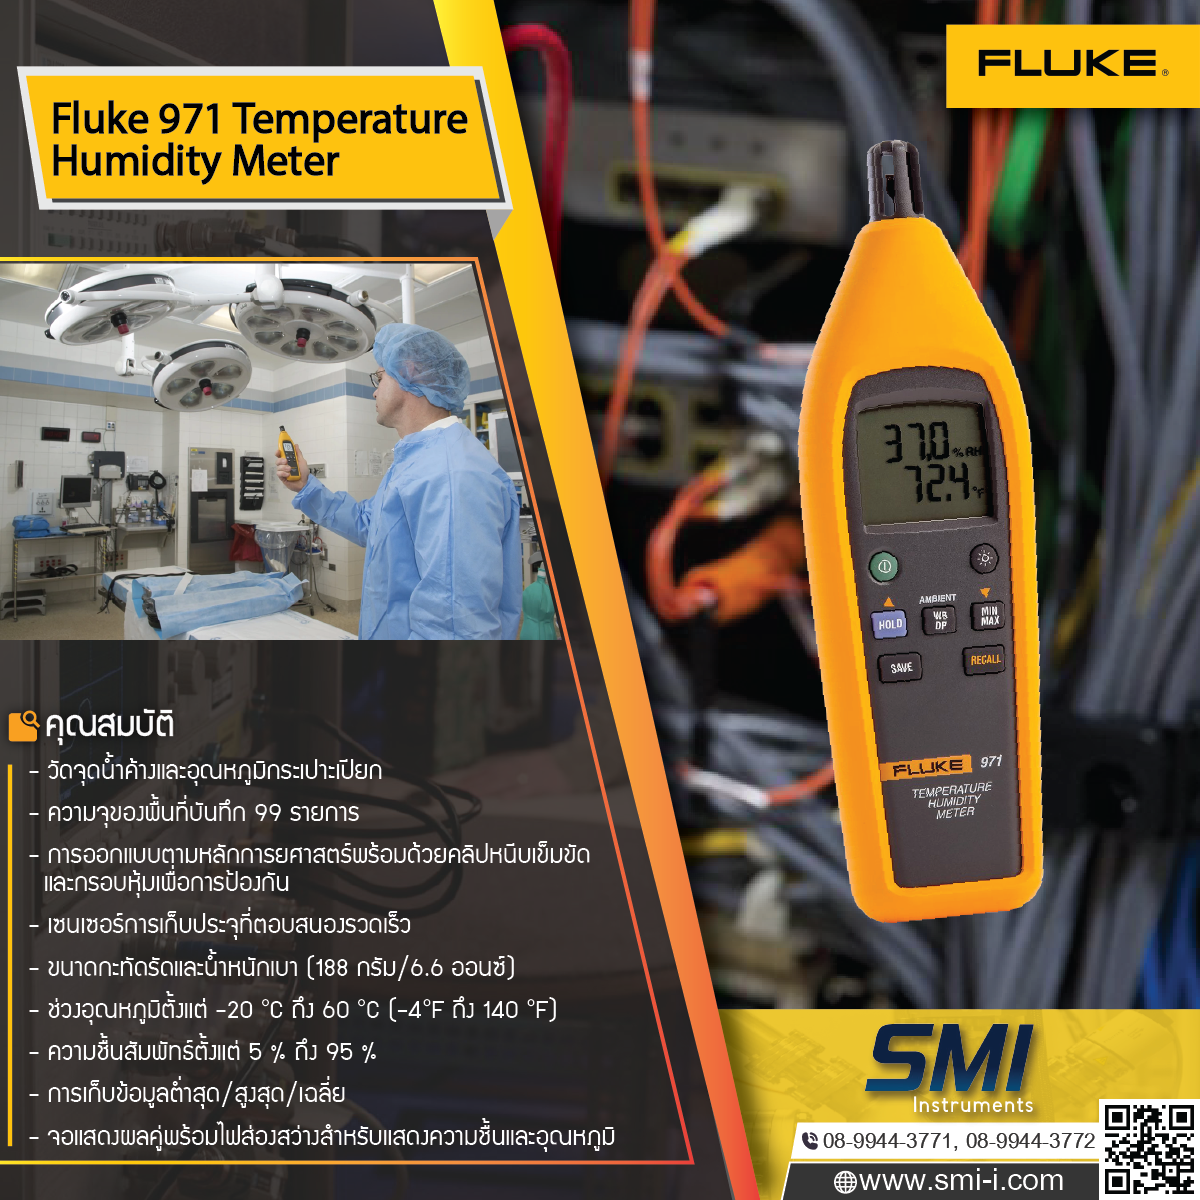 SMI info FLUKE 971 Temperature Humidity Meter